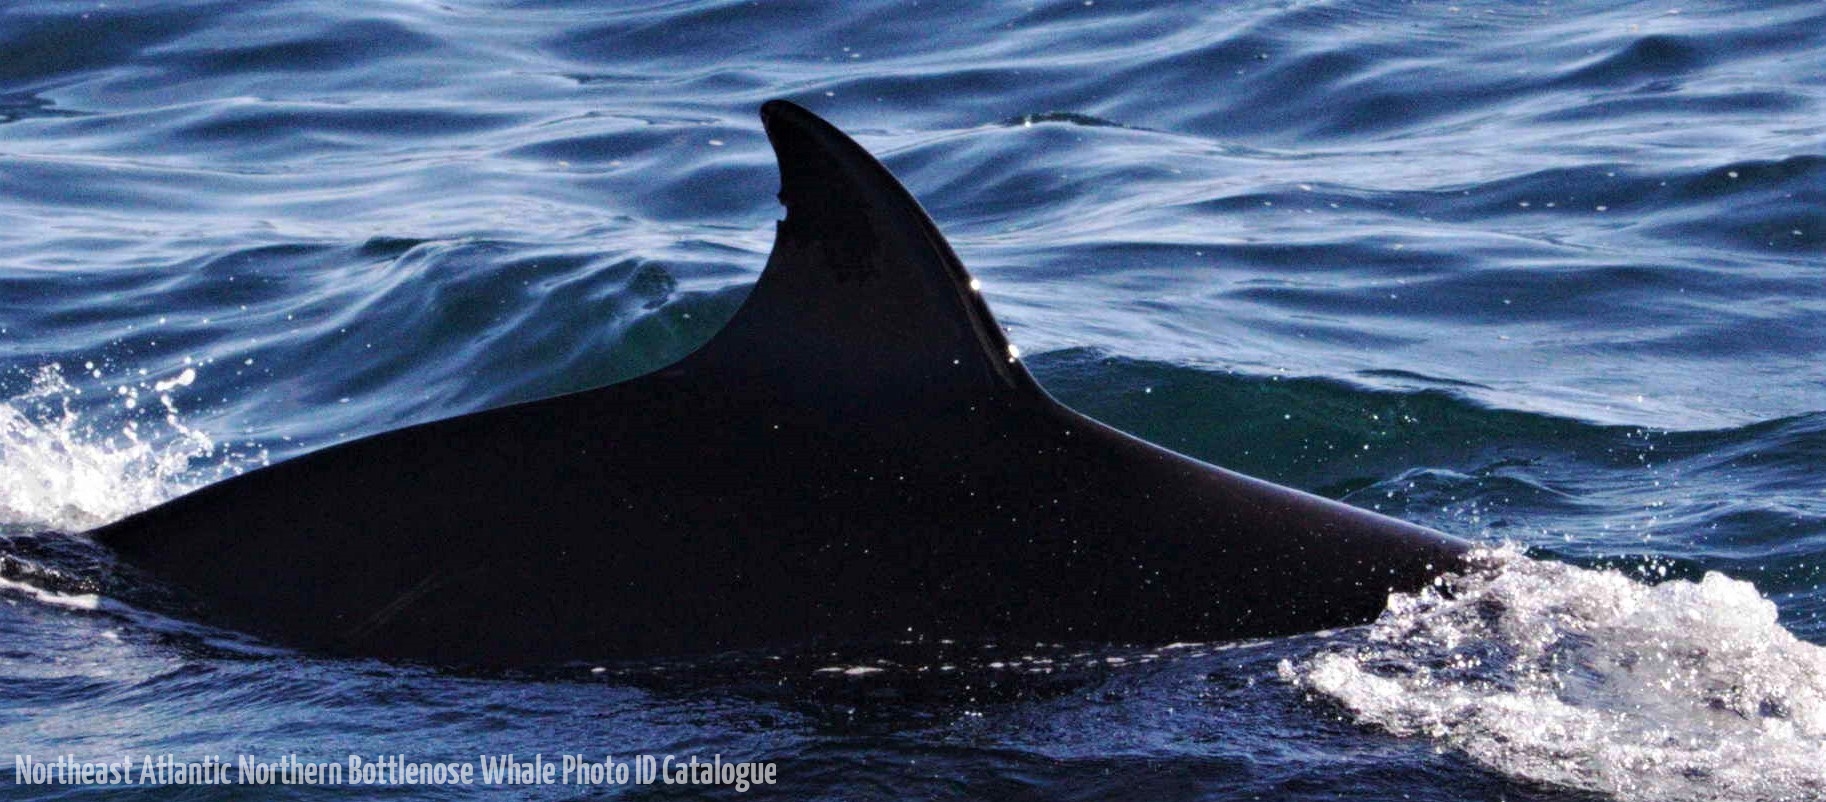 Whale ID: 0299,  Date taken: 12-06-2014,  Photographer: Lucia M. Martín López